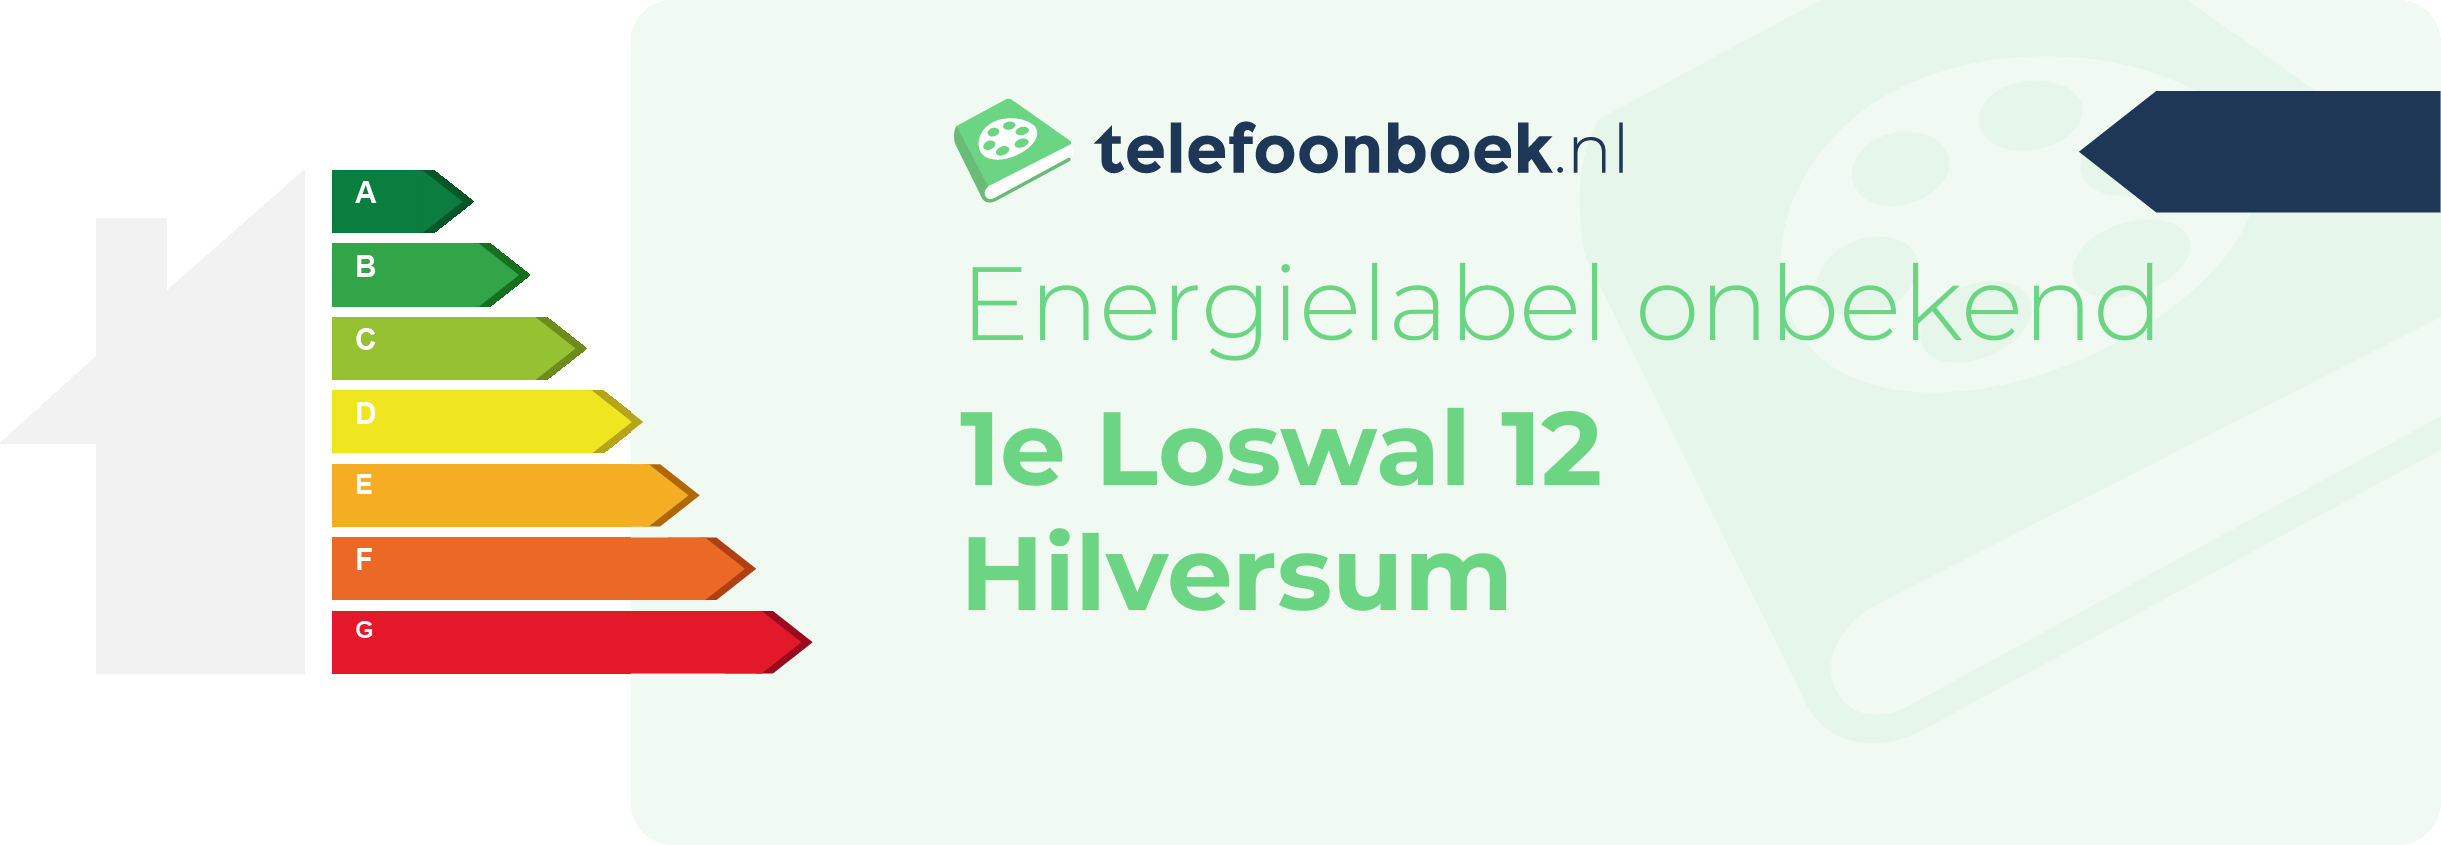 Energielabel 1e Loswal 12 Hilversum